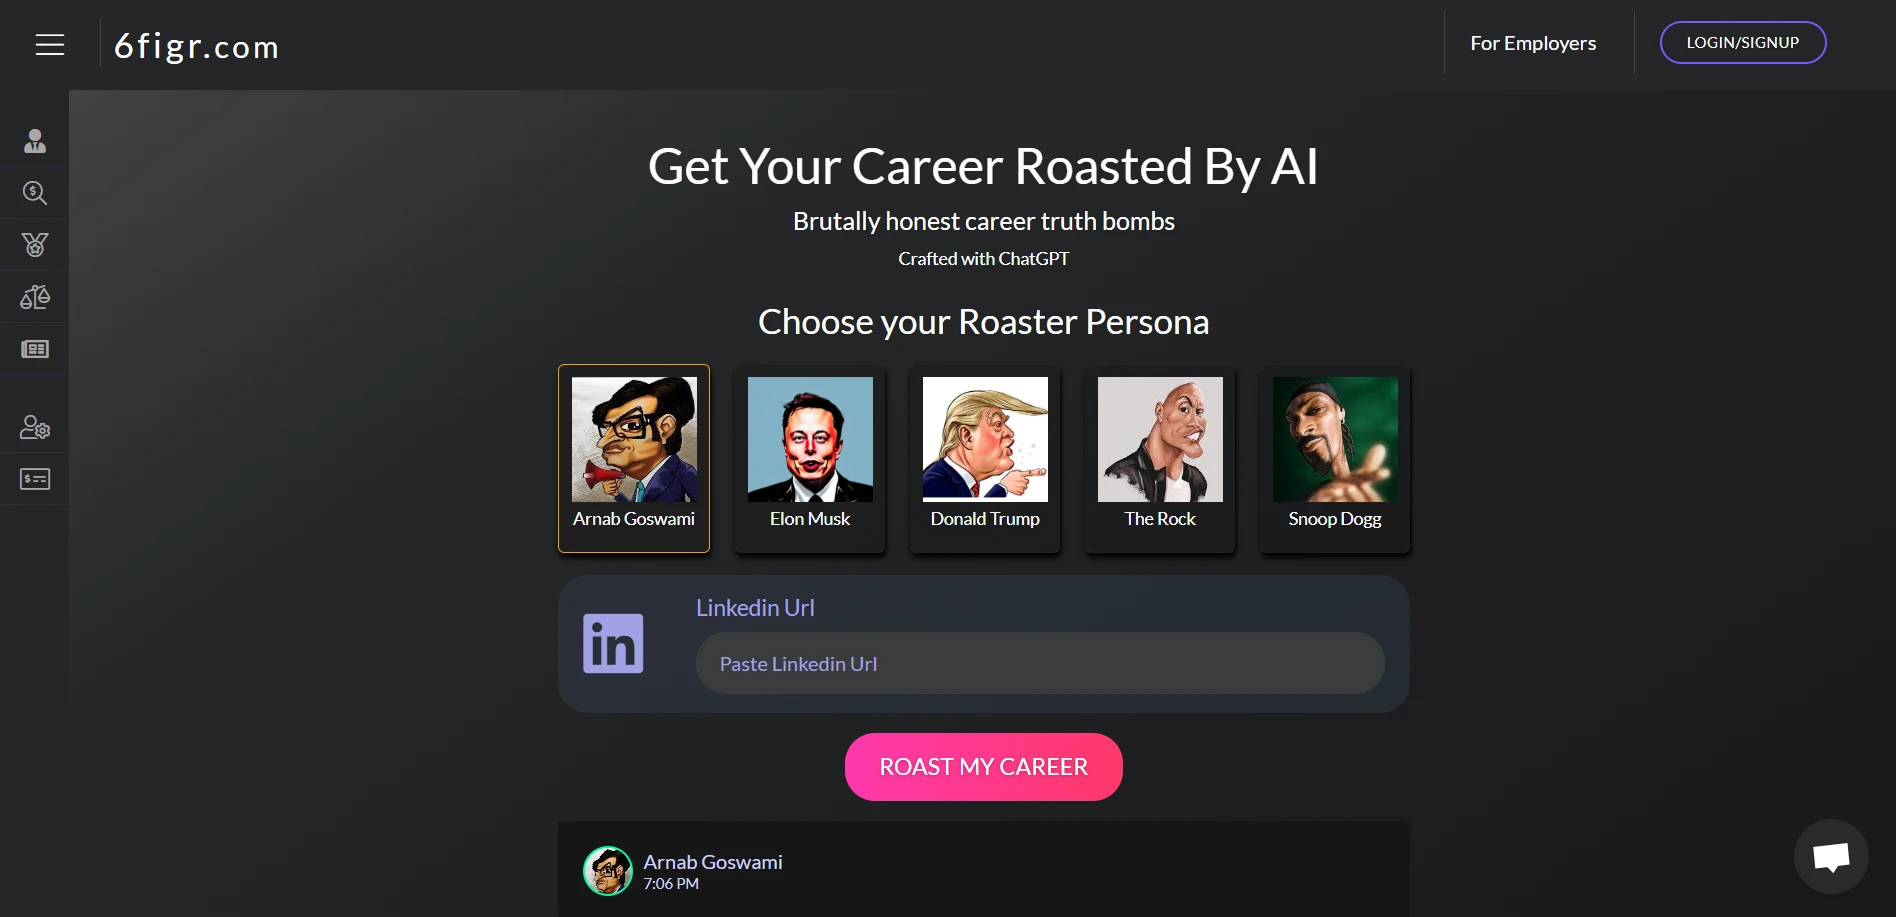 AI Roasts My Careerwebsite picture